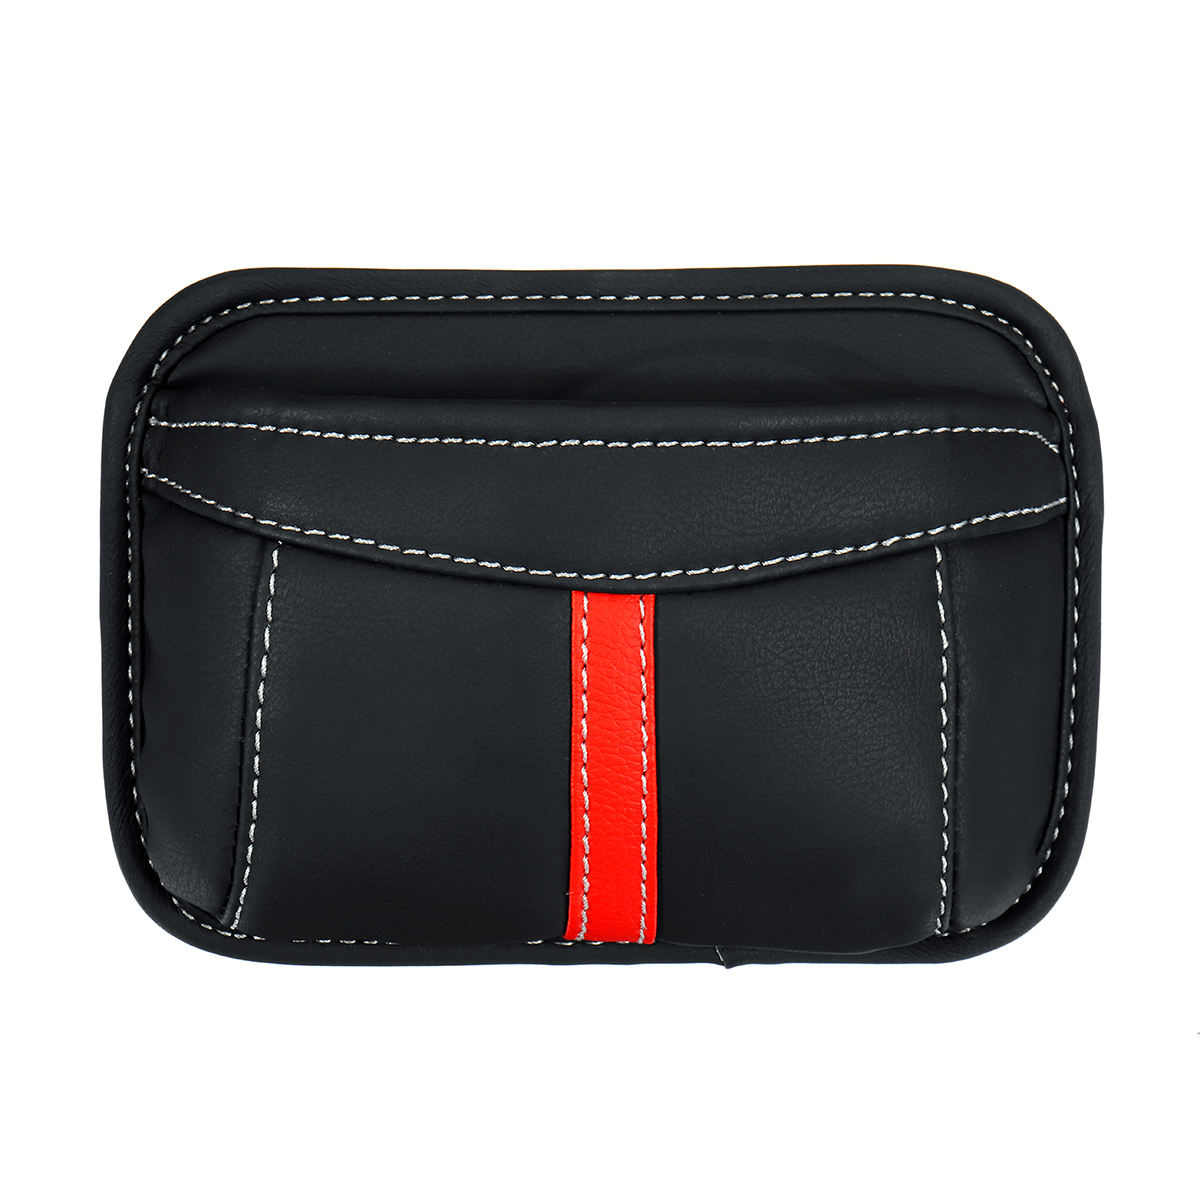 Car-Storage-Bag-Organizer-Phone-Wallet-Pocket-Pouch-Hanging-Holder-PU-leather-1632847-6